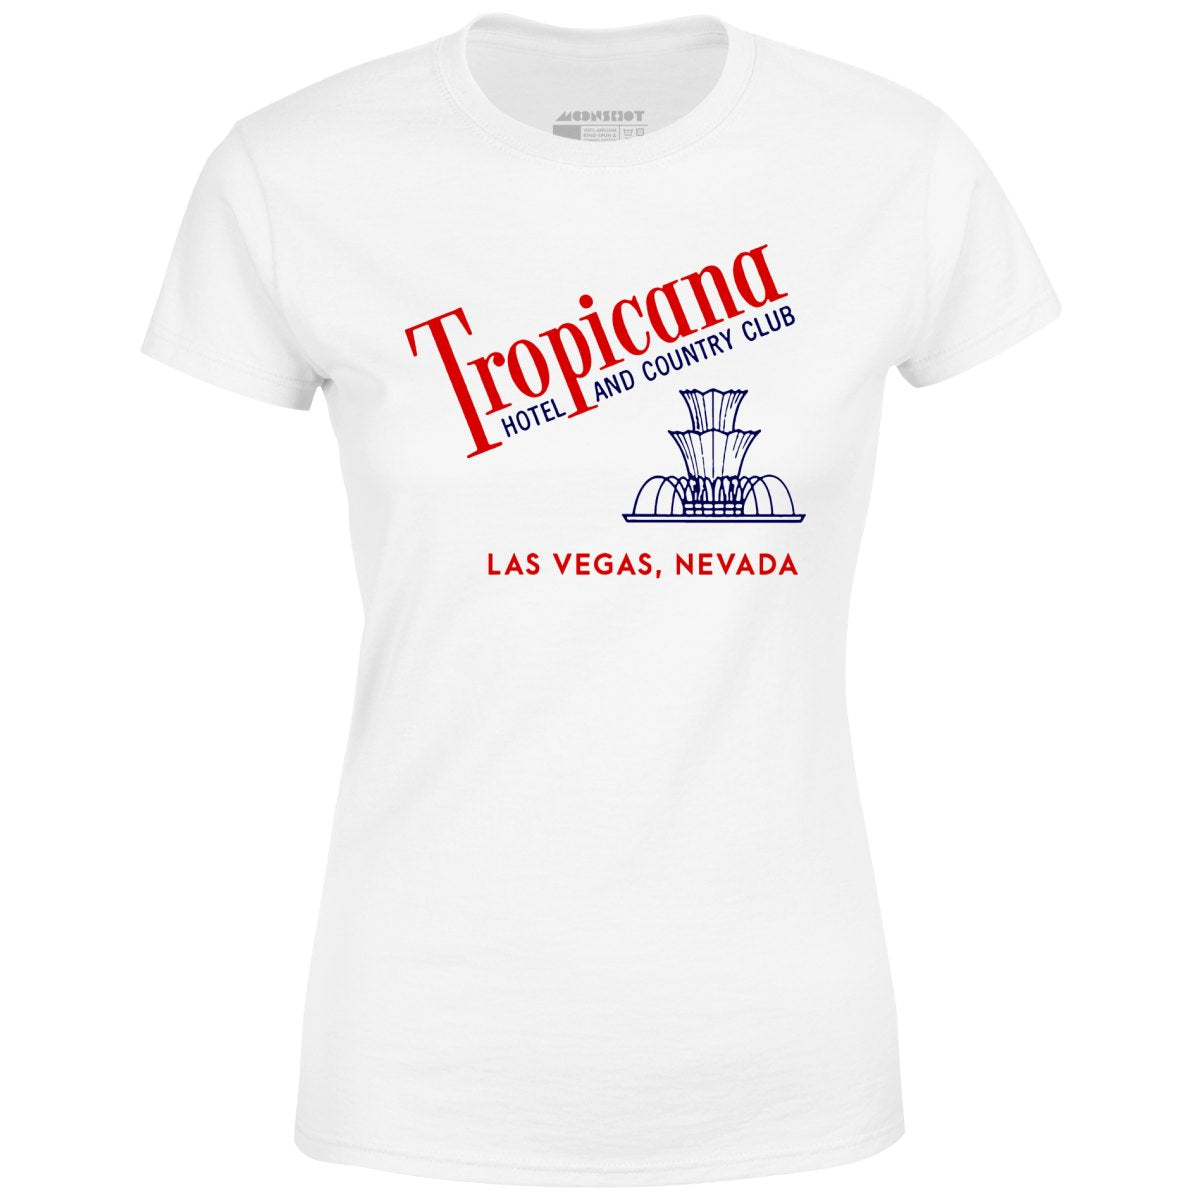 Tropicana Hotel and Country Club - Vintage Las Vegas - Women's T-Shirt